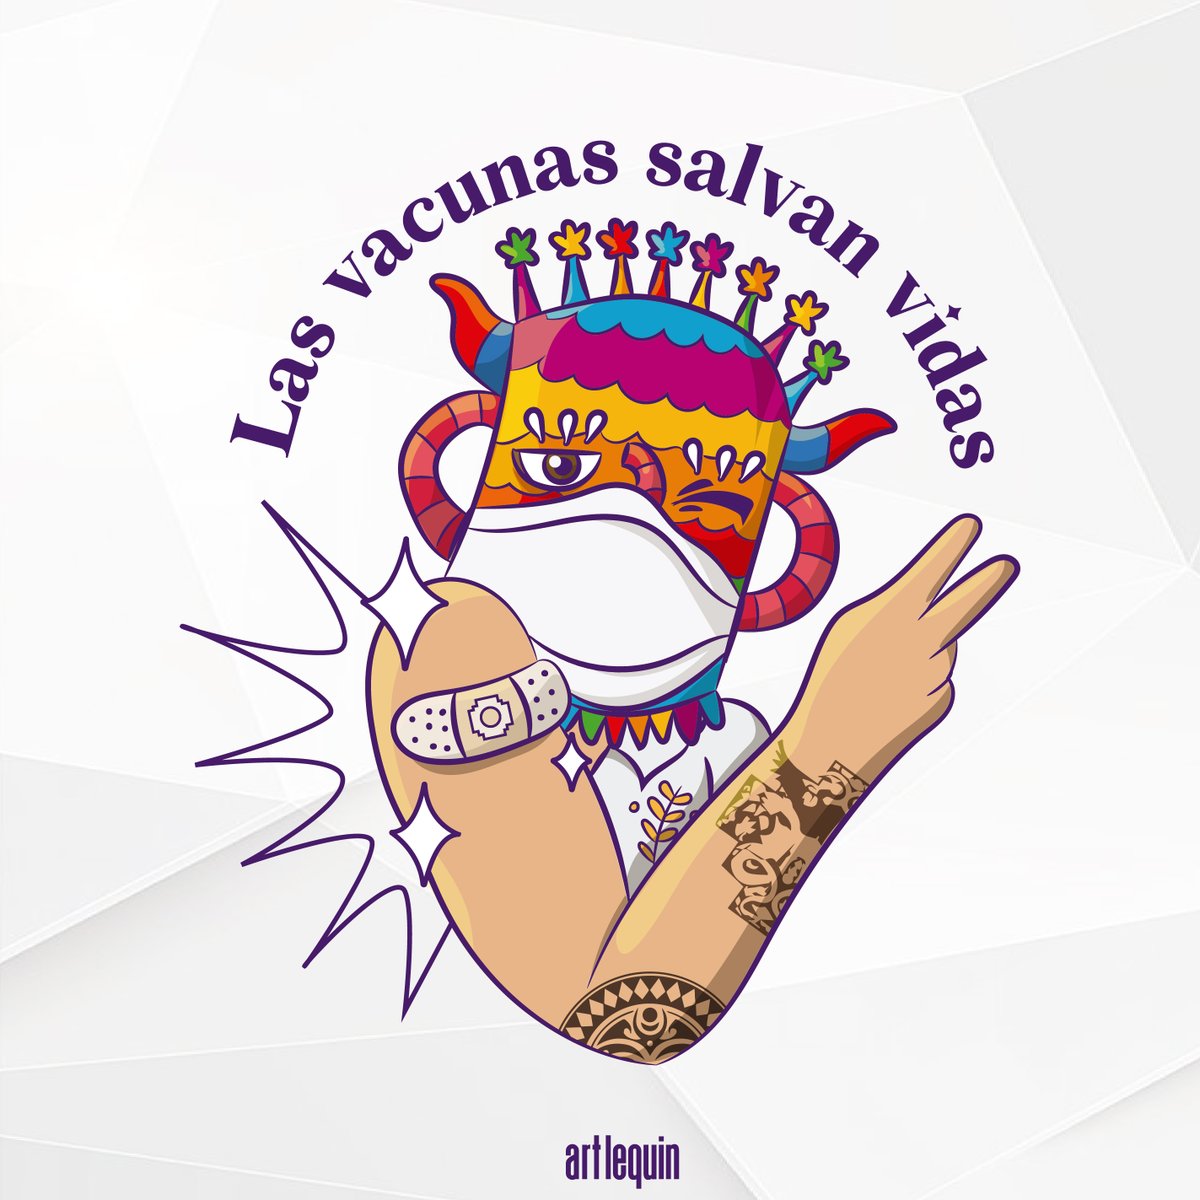 Vacúnate Ecuador
<<Ayuda a quien mas quieres>>
#vacuna #vᴀᴄᴜɴᴀcᴏᴠɪᴅ19 #vacunasalvacidas #ecuador🇪🇨 #characterdesign #diseñoecuador #illustrationartists #quito #riobamba #artlequin